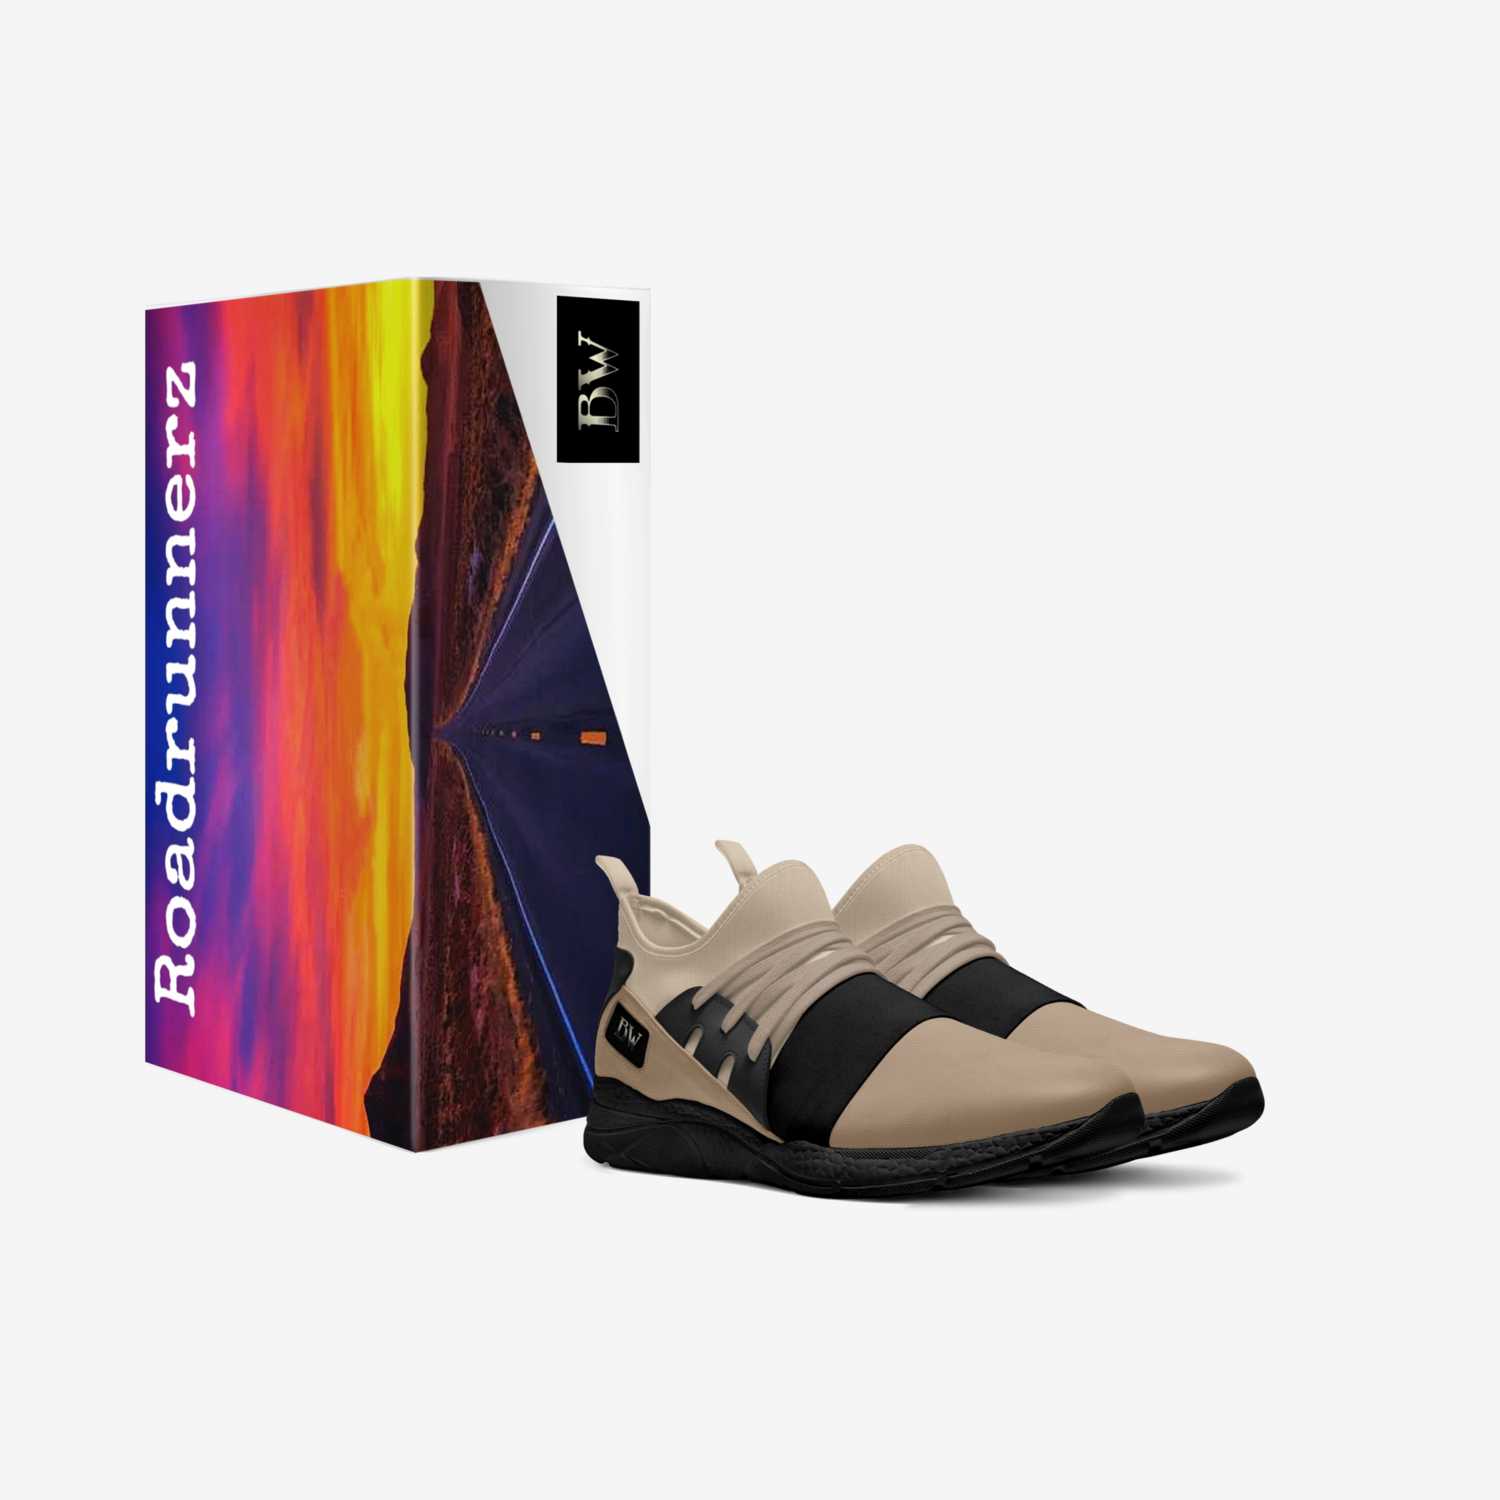 Roadrunnerz custom made in Italy shoes by Garrett Berlier | Box view